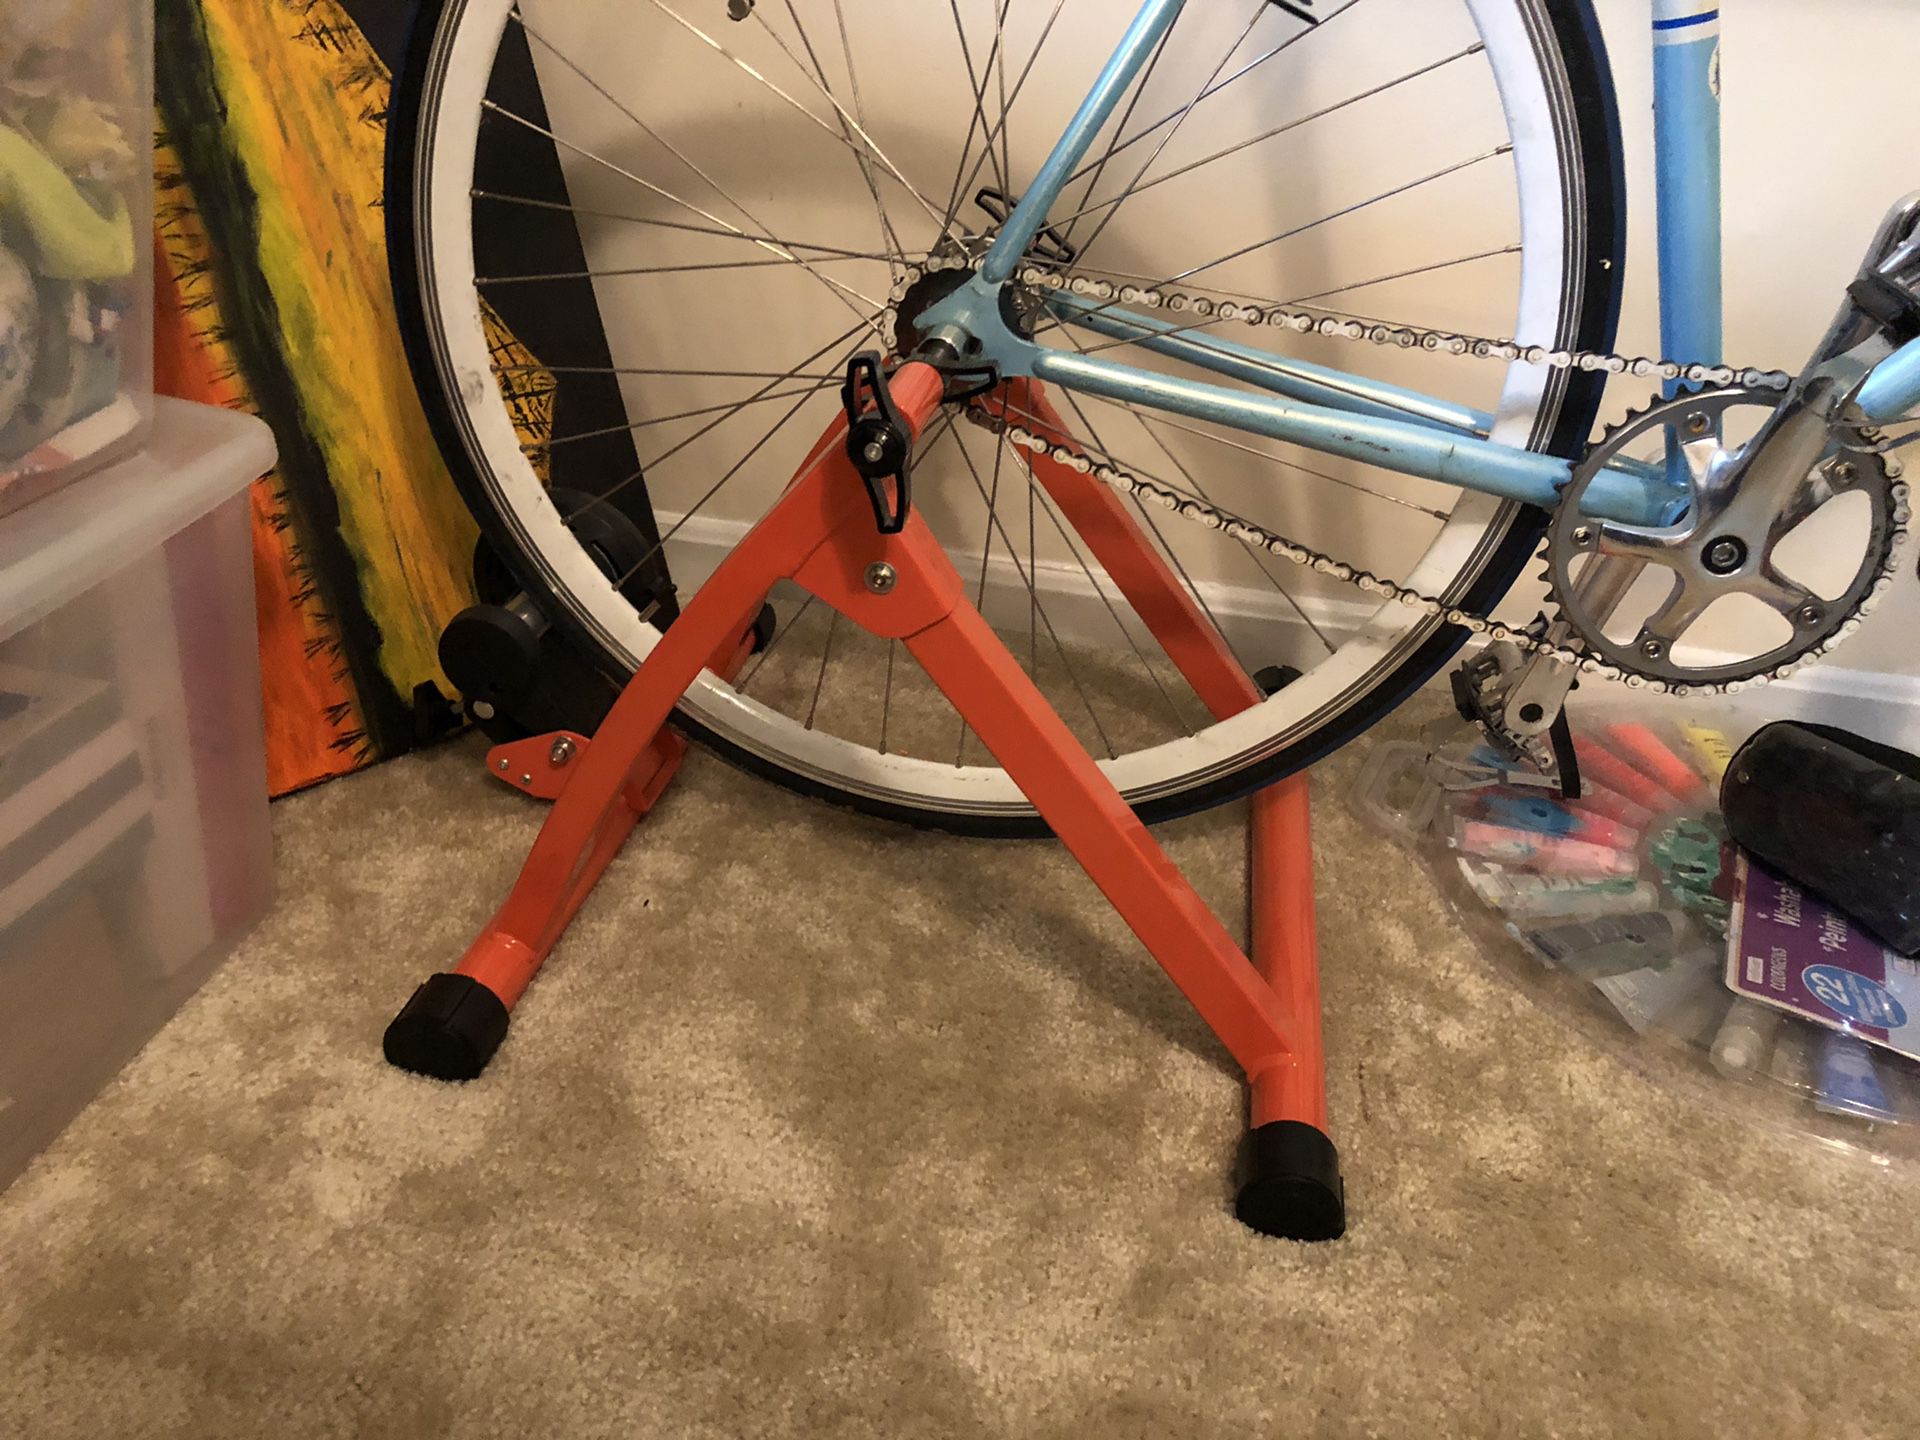 Stationary bike And mount